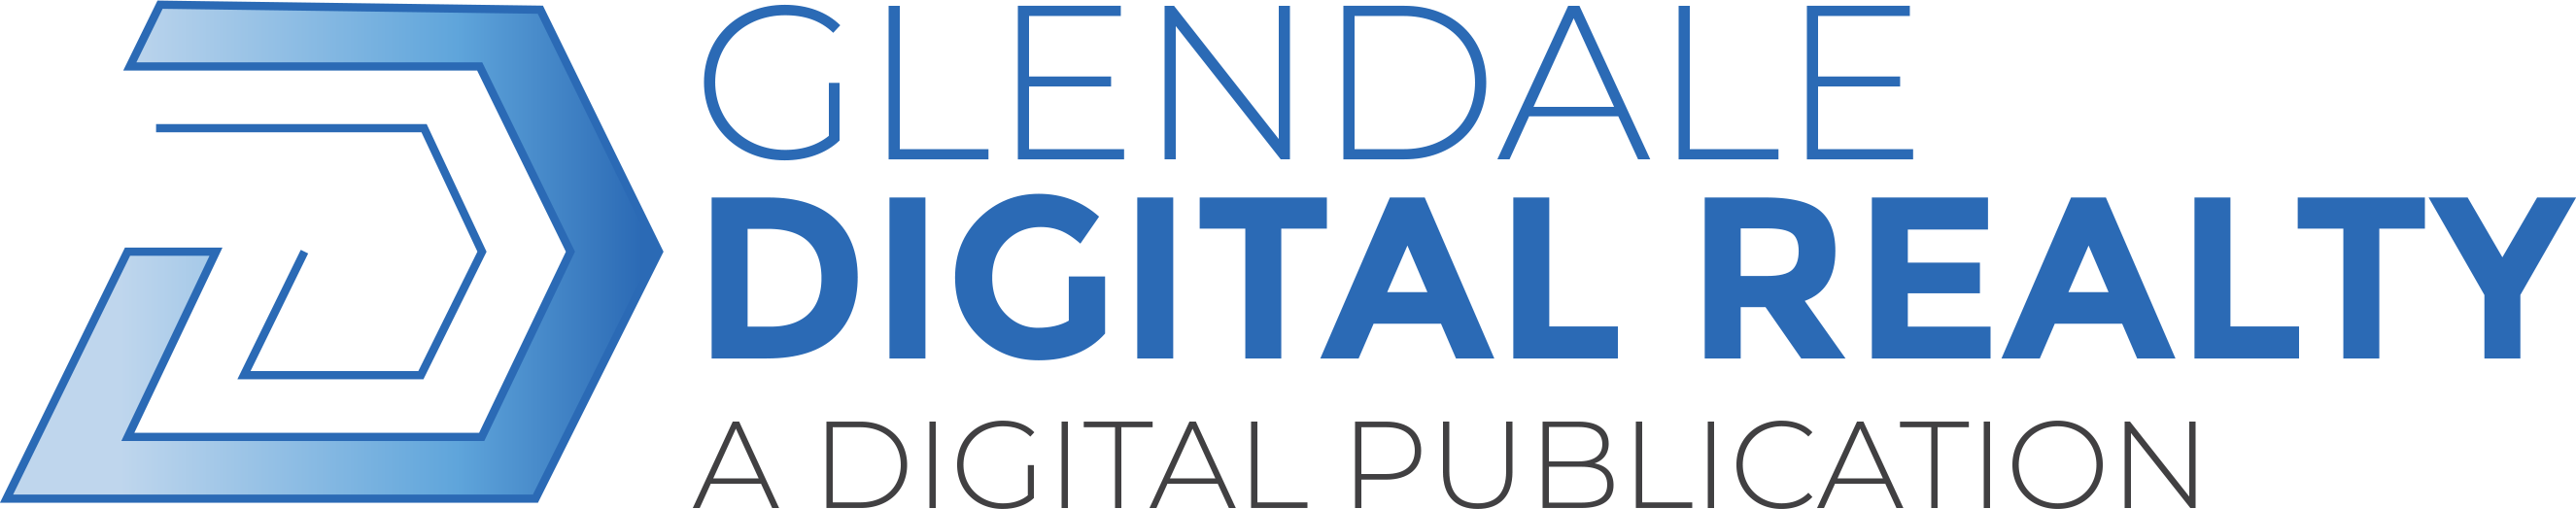 Glendale Digital Realty Logo